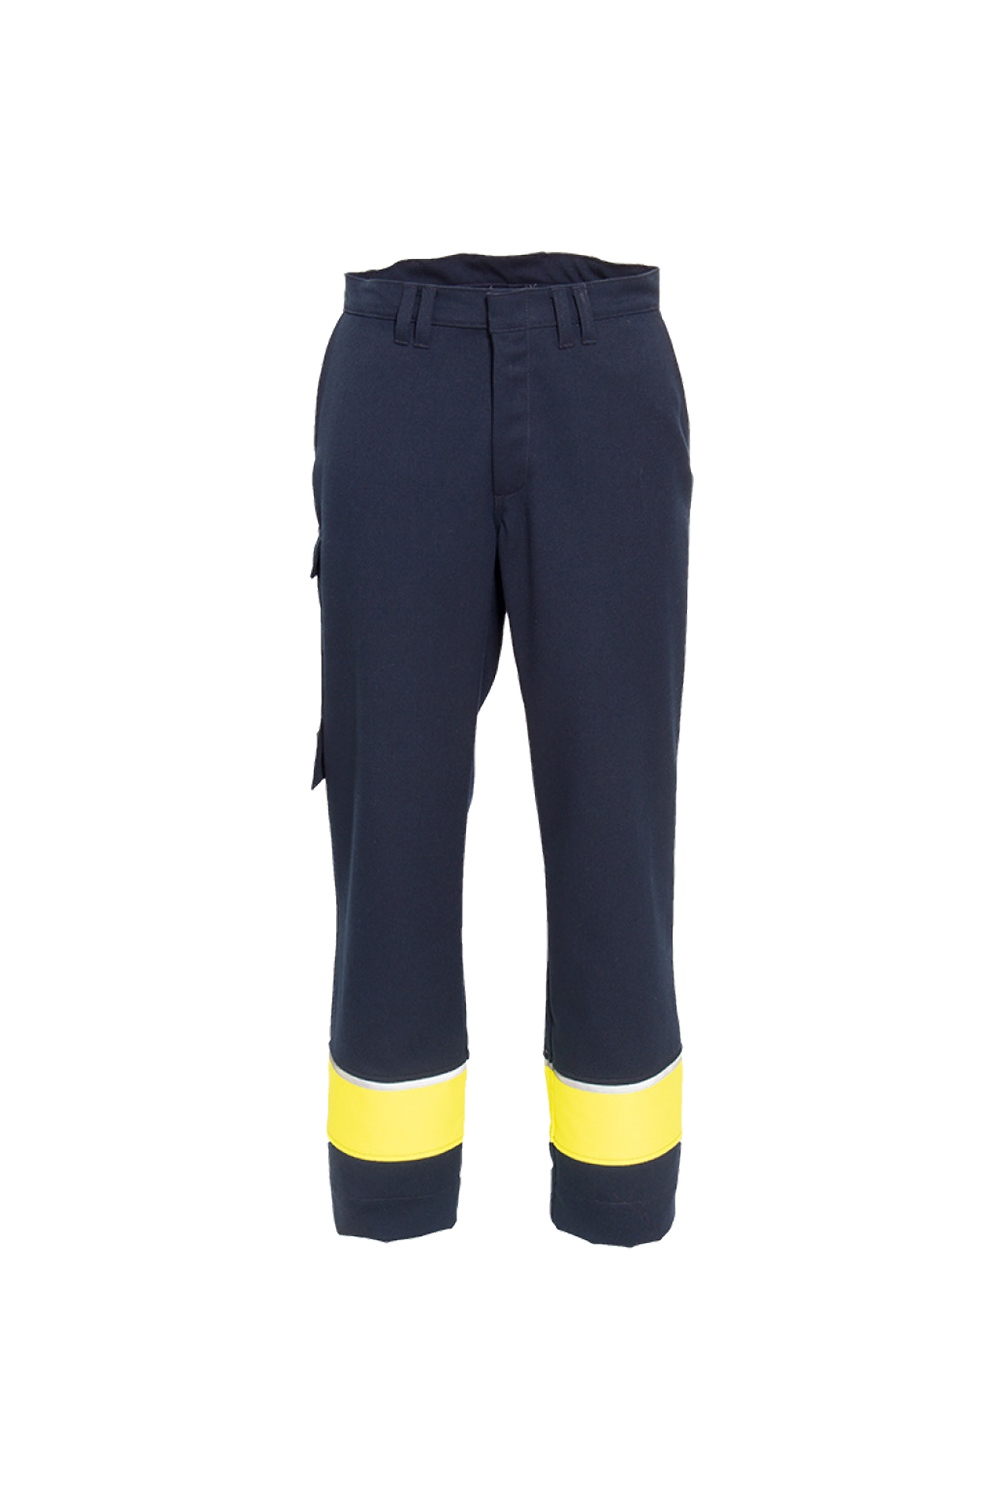 Magma FR Pants 5625 87 / Tranemo / Workwear